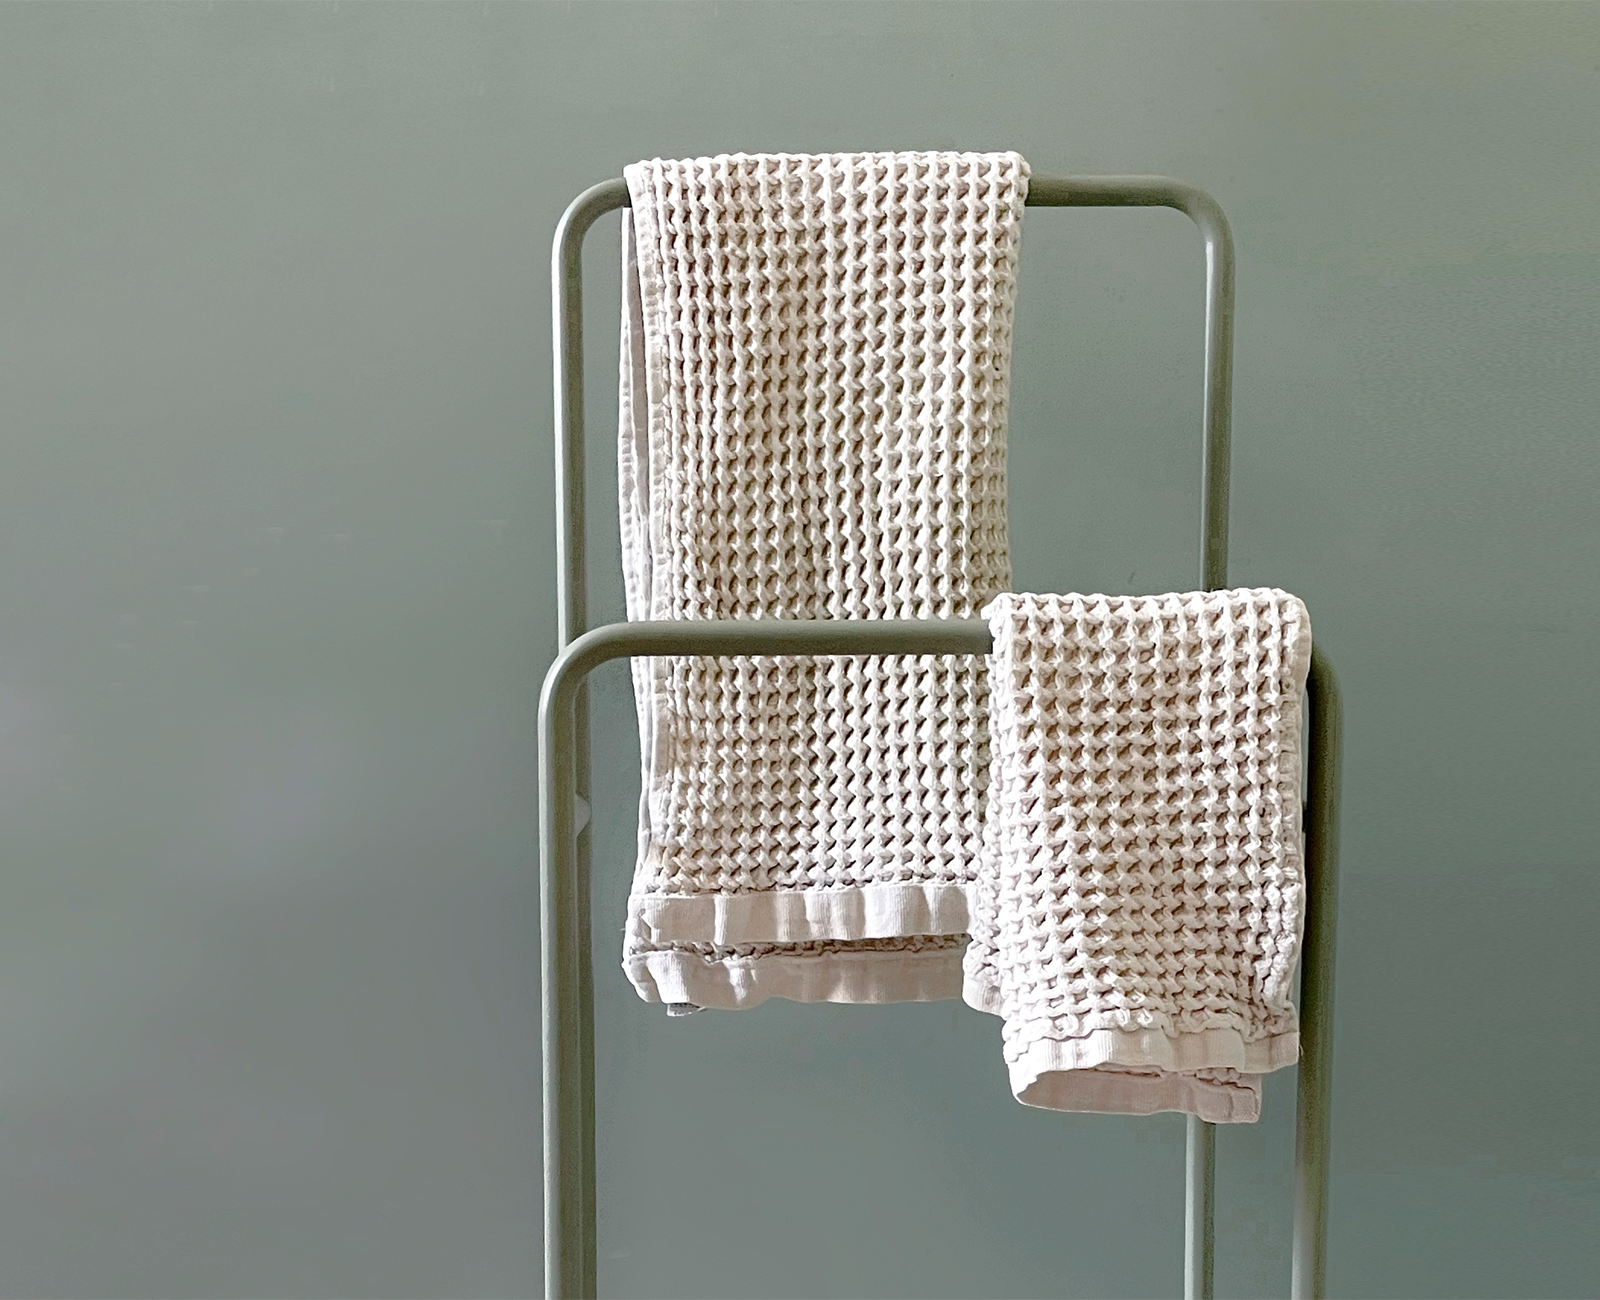 Positano freestanding towel rack detail